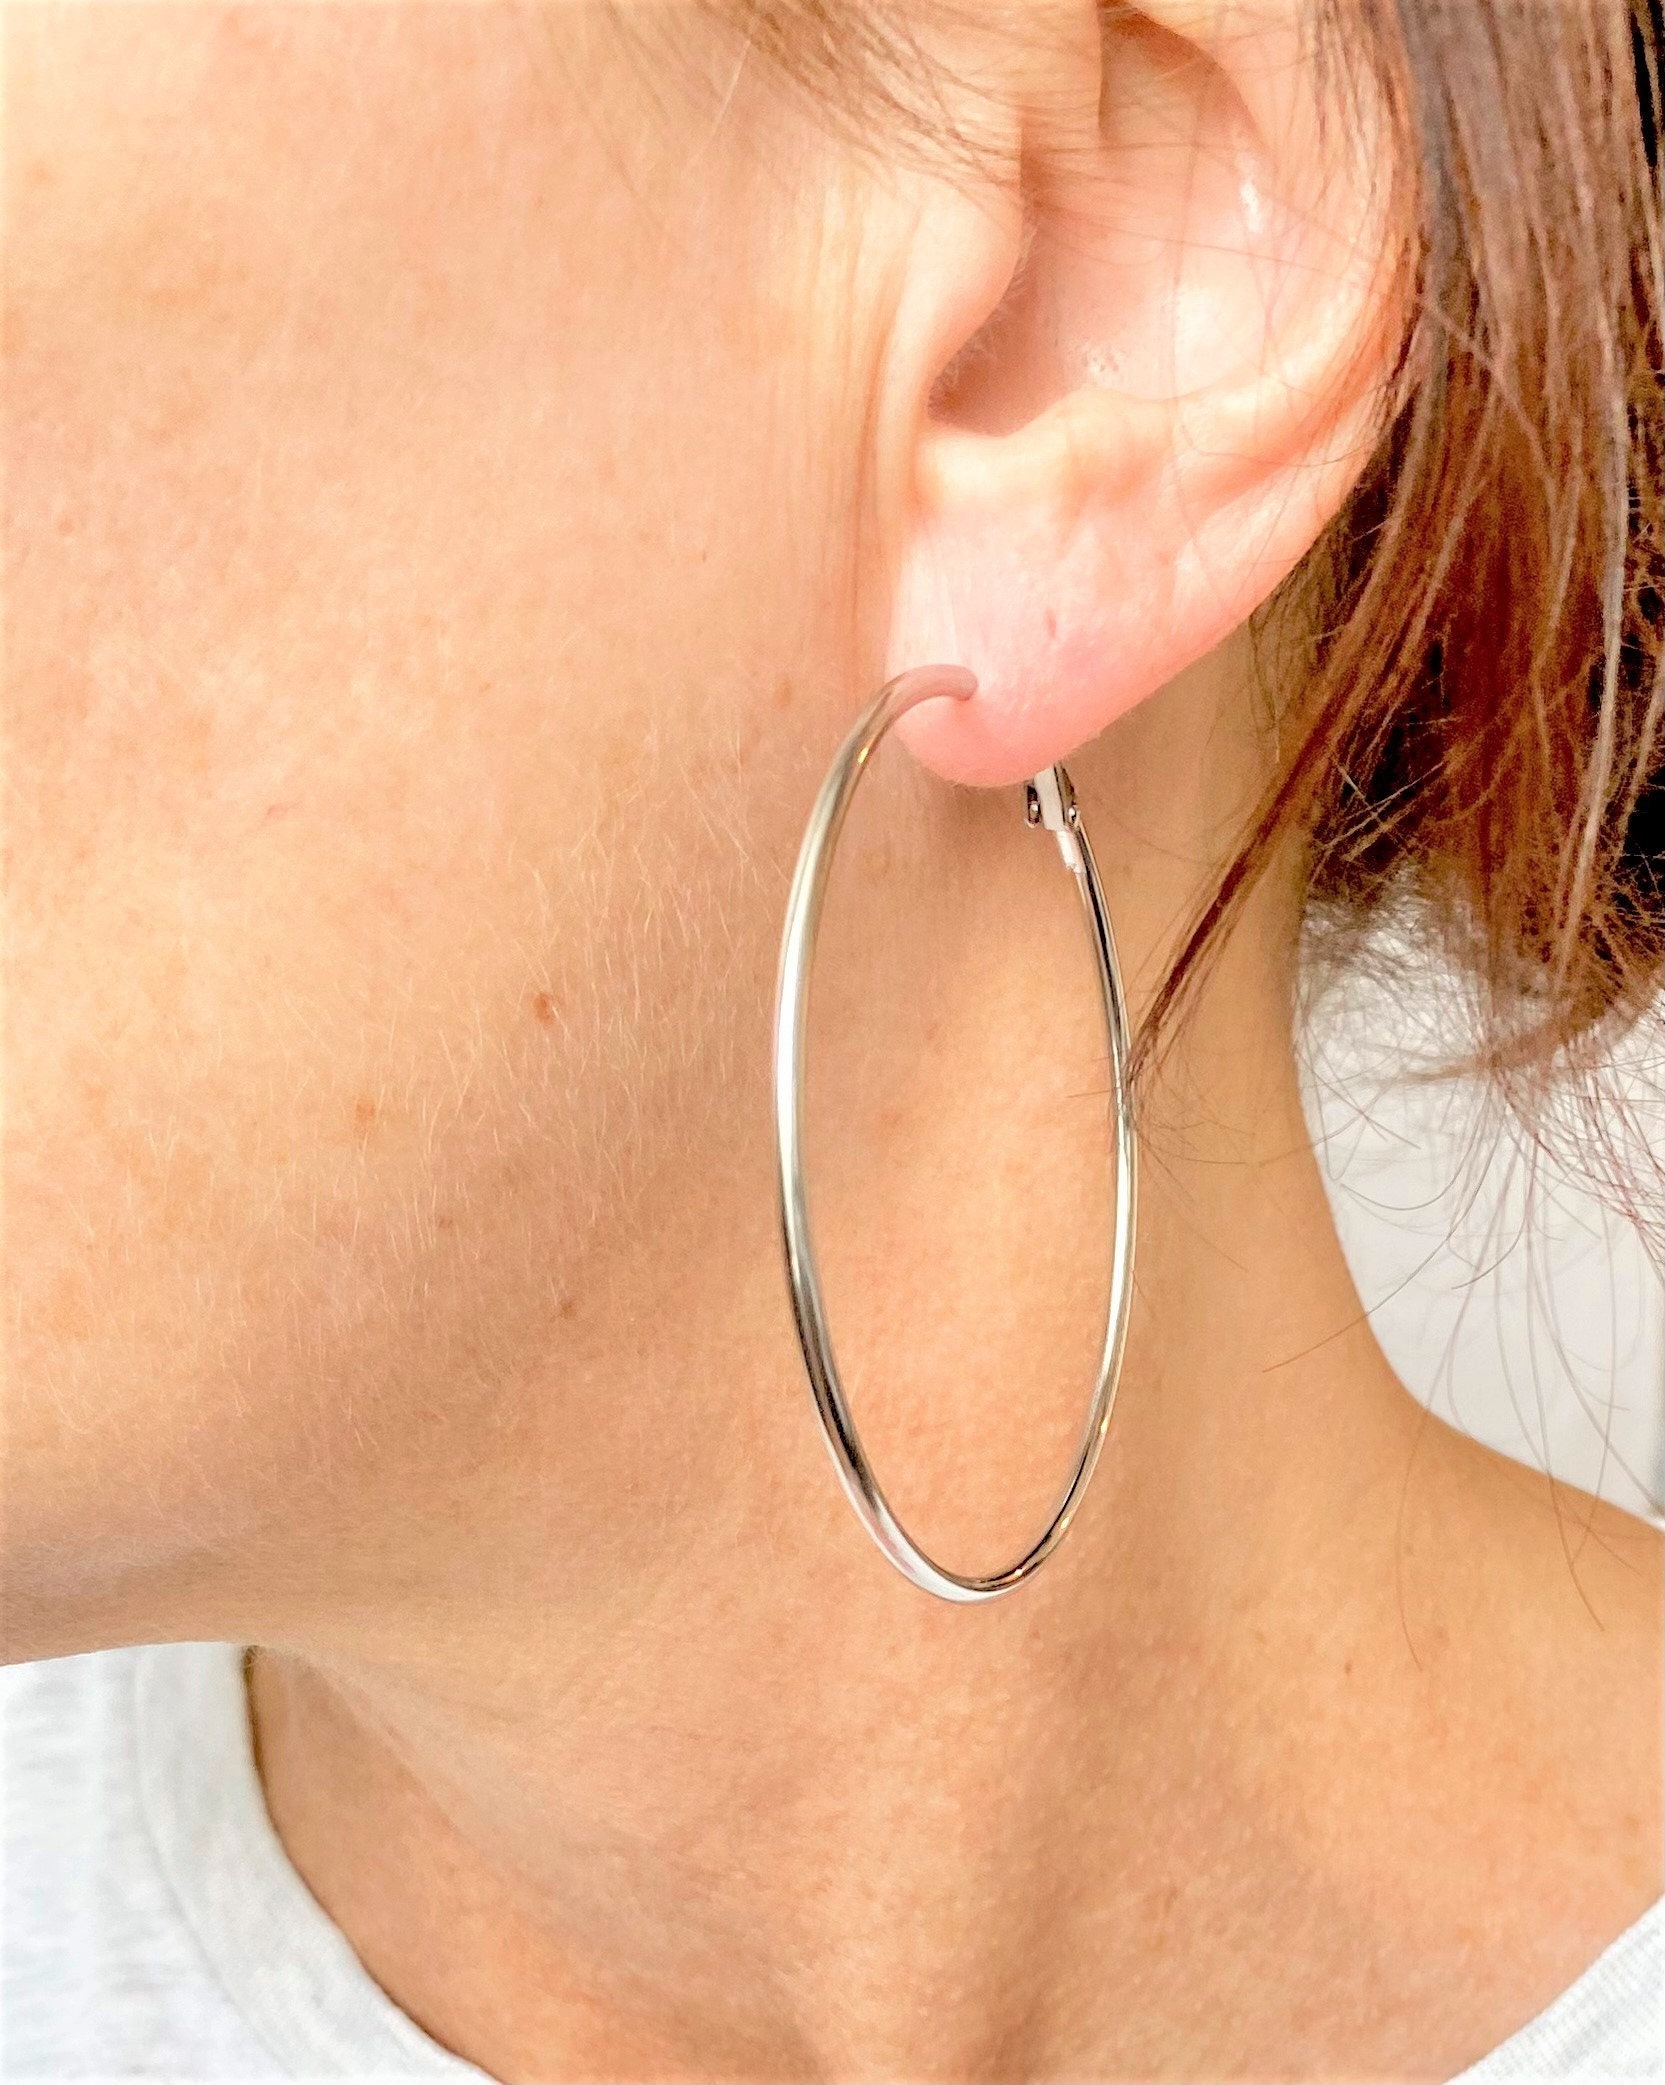 Sasylvia 8 Pcs Earring Backs for Droopy Ears Stainless Steel Disc Earring  Backs for Studs, Heavy Earrings, Secure Pierced Stainless Steel Earring